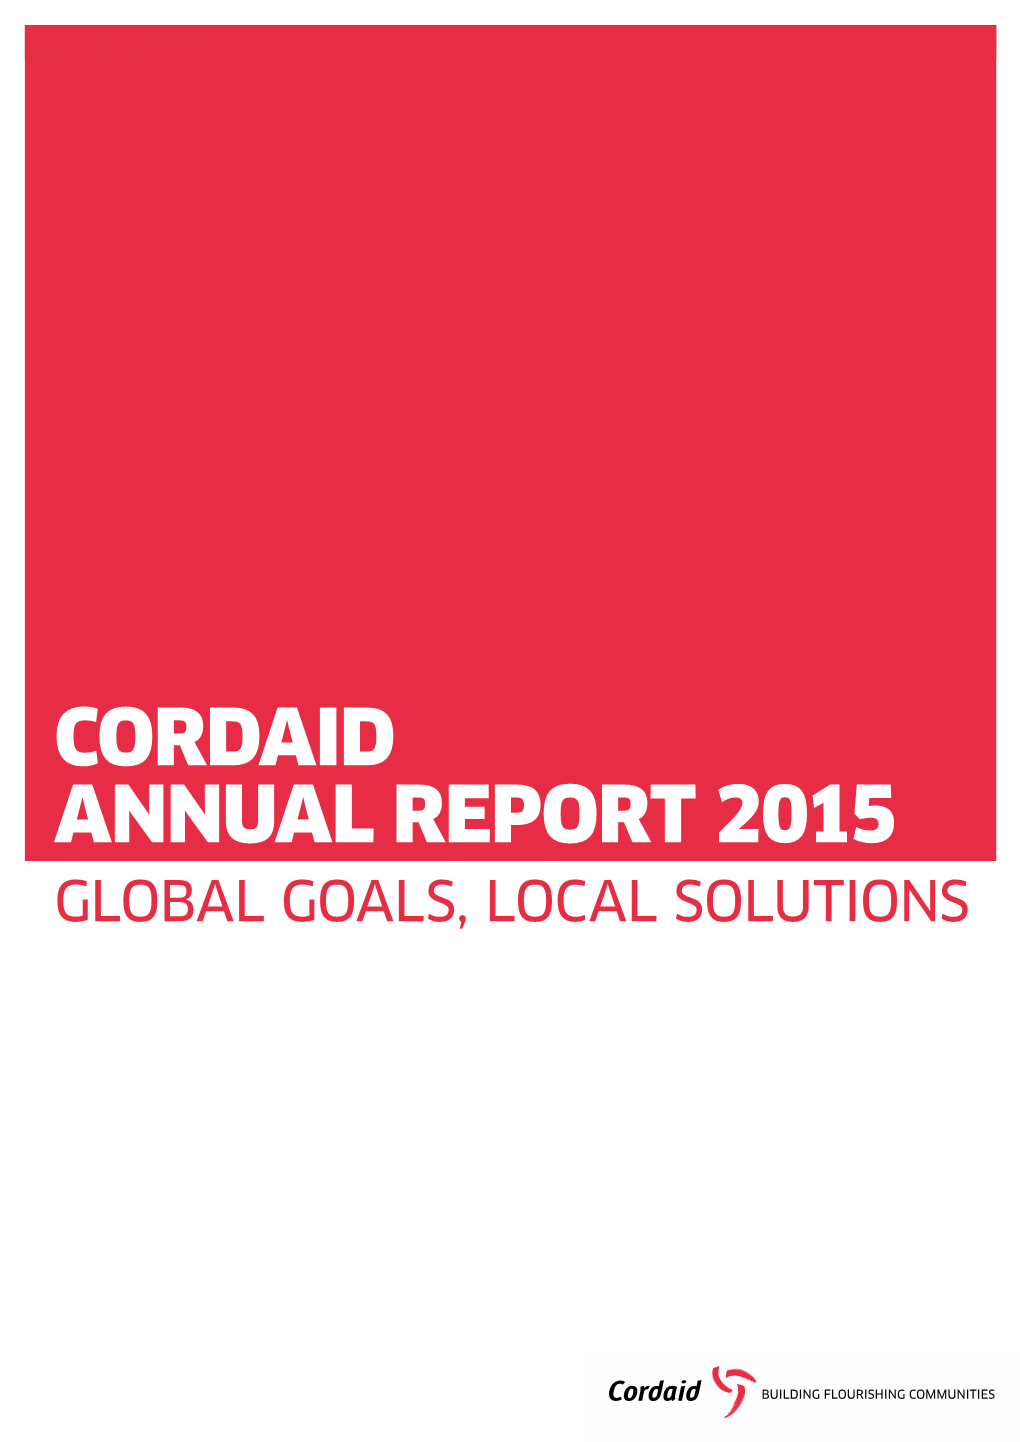 Cordaid Annual Report 2015 Global Goals, Local Solutions Cordaid 2015 Annual Report